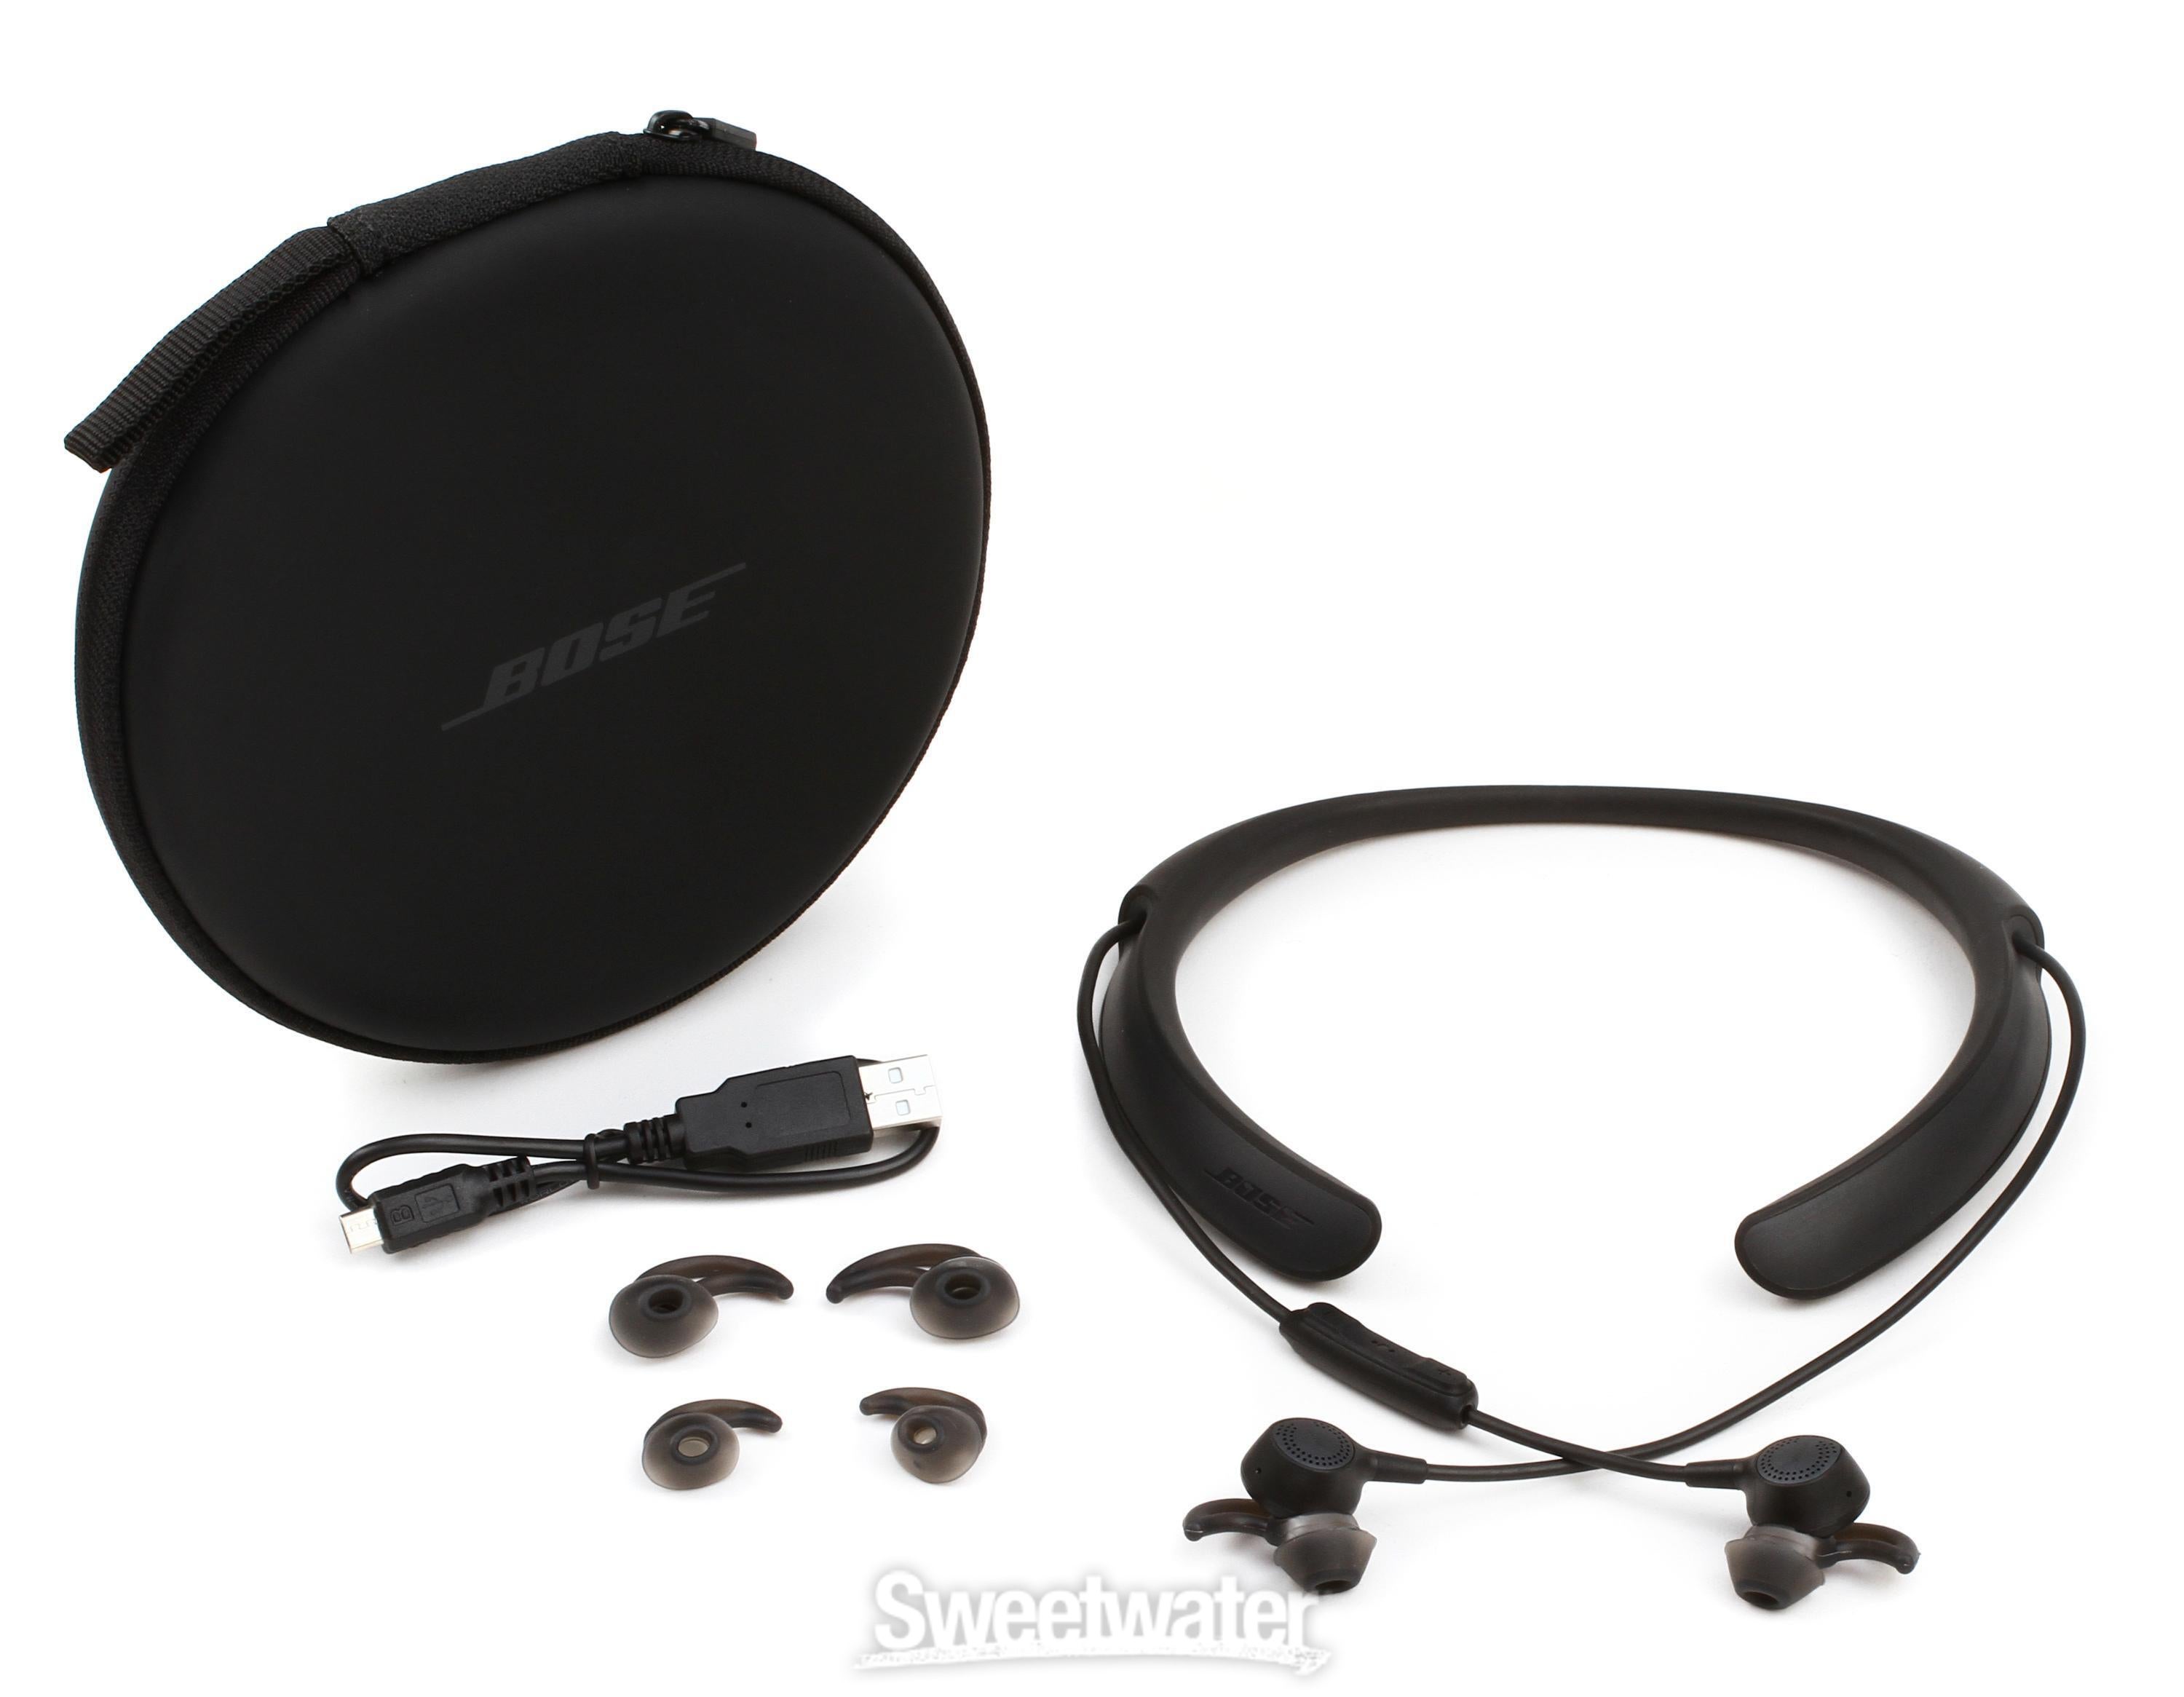 Bose QuietControl 30 Wireless Headphones - Black | Sweetwater